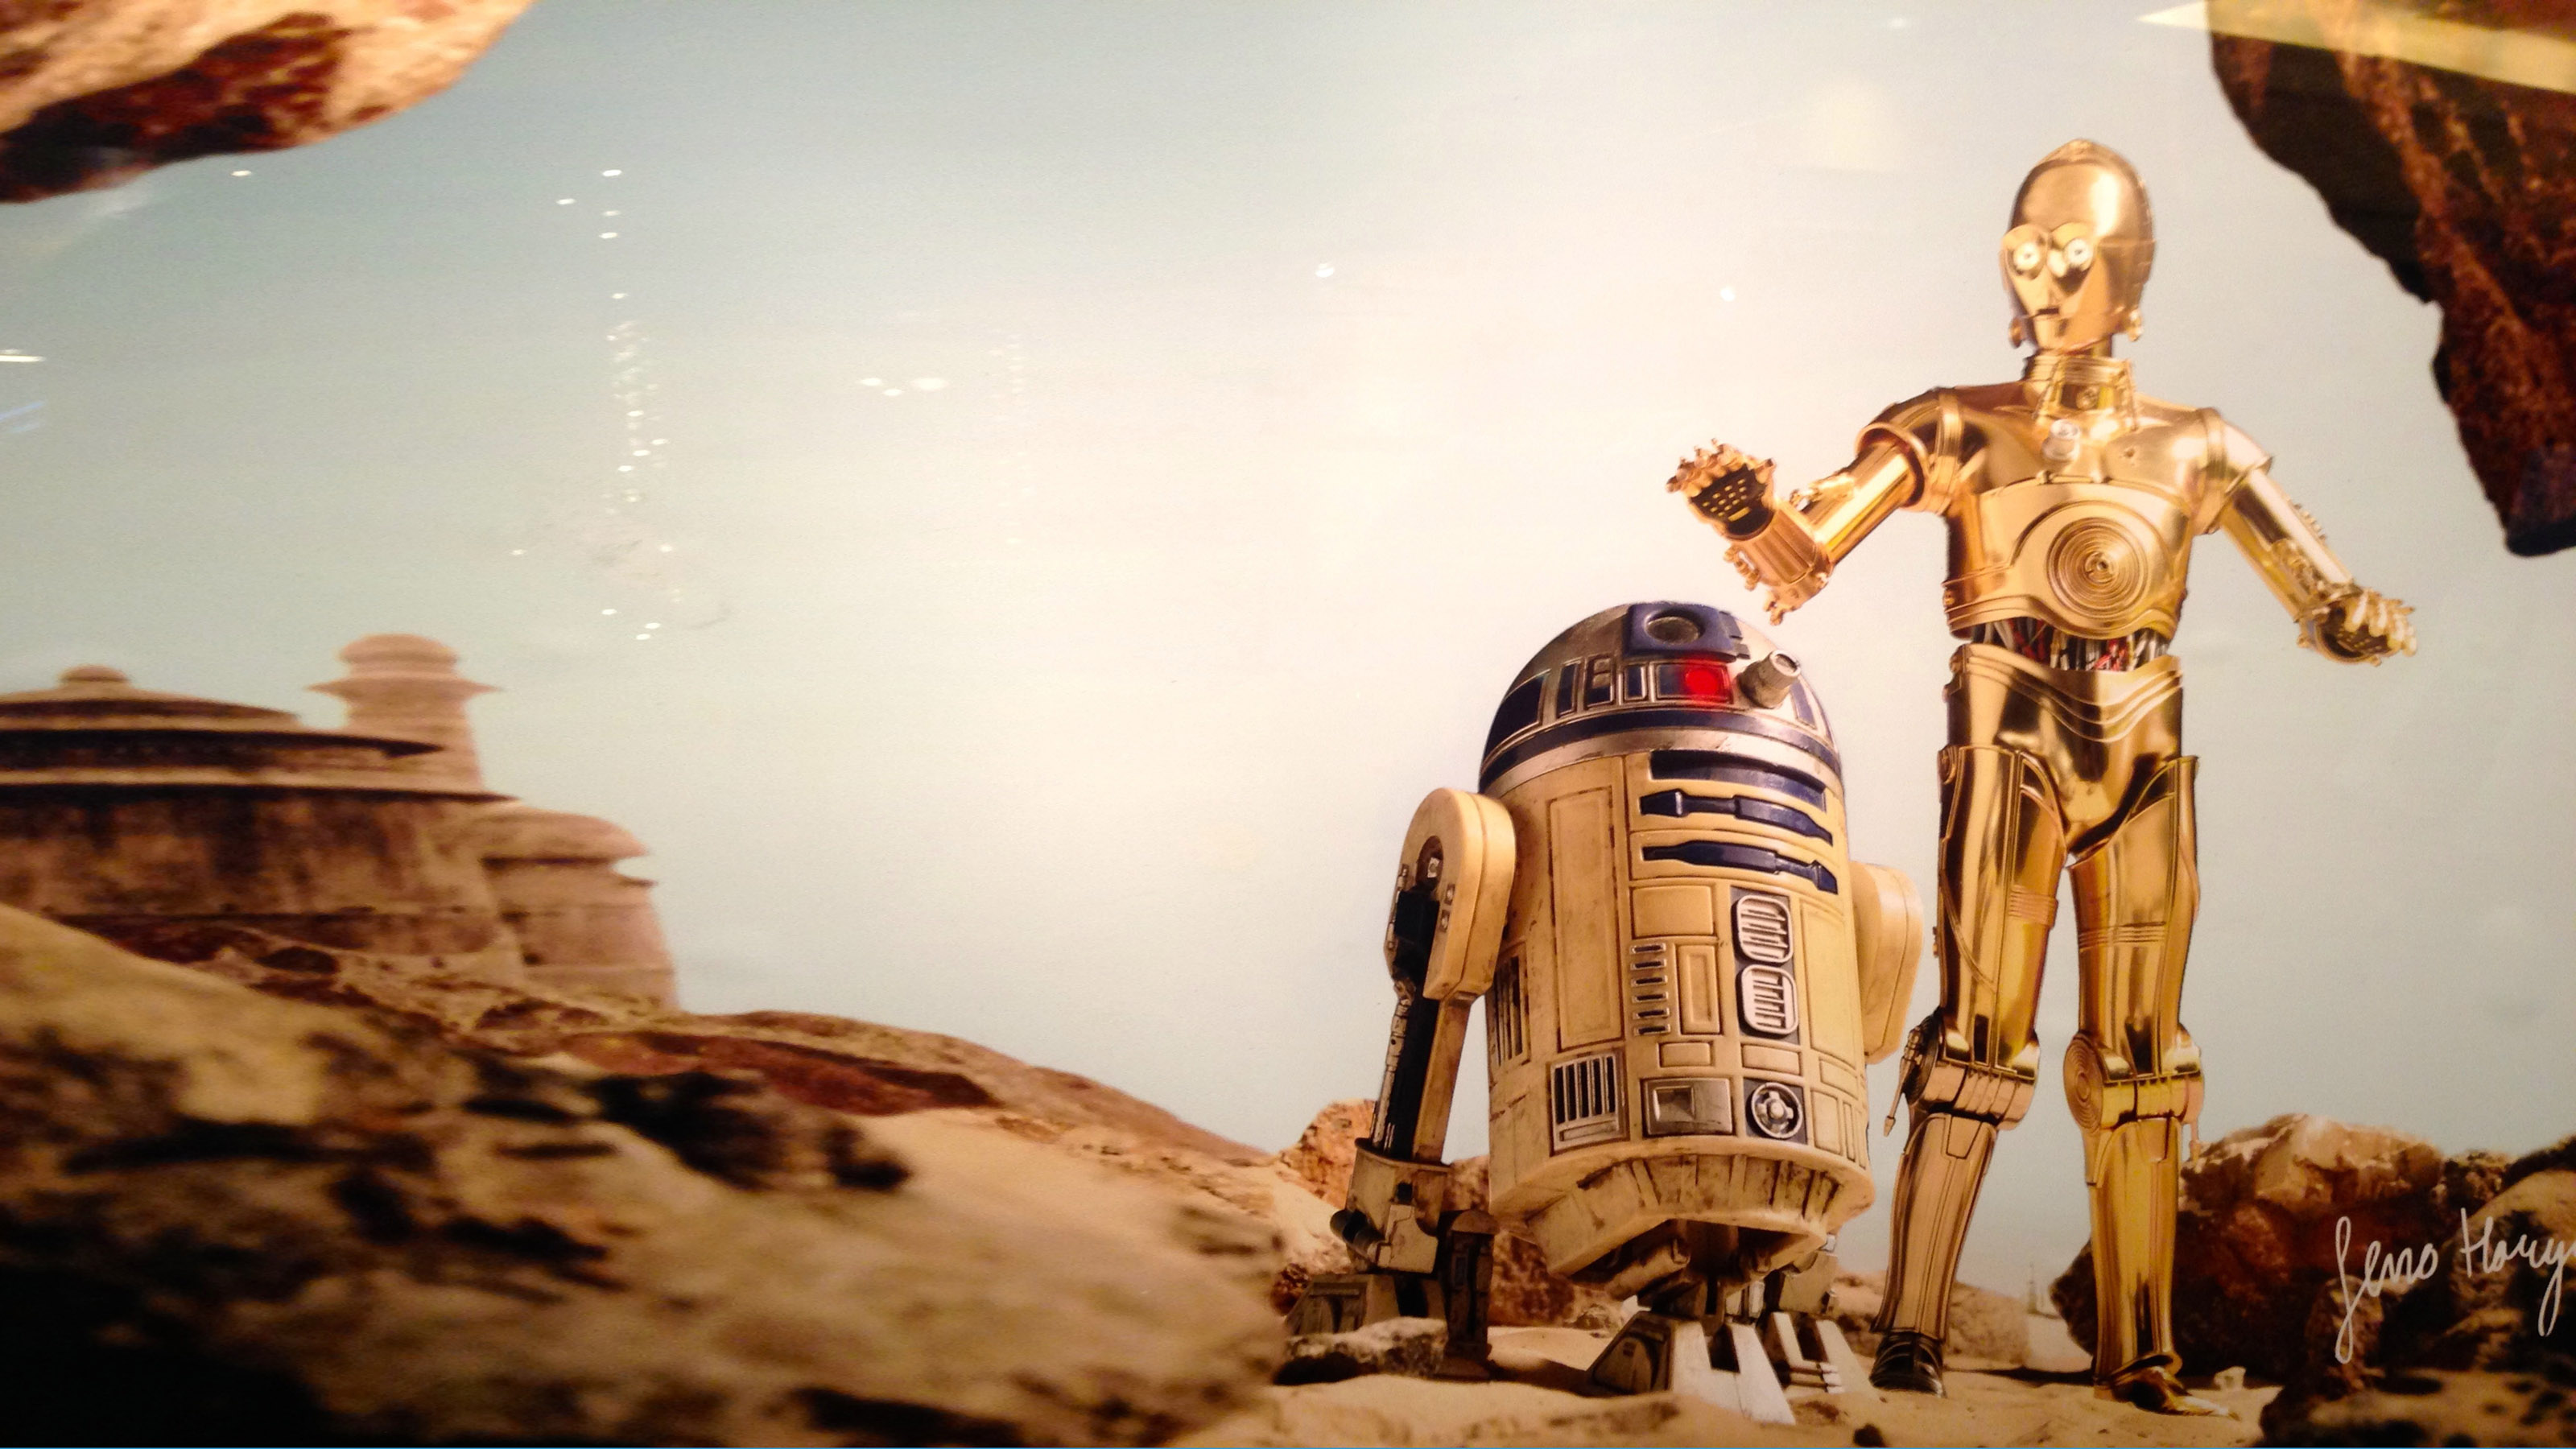 Star Wars-R2-D2 and C-3PO-Wallpaper HD : Wallpapers13.com